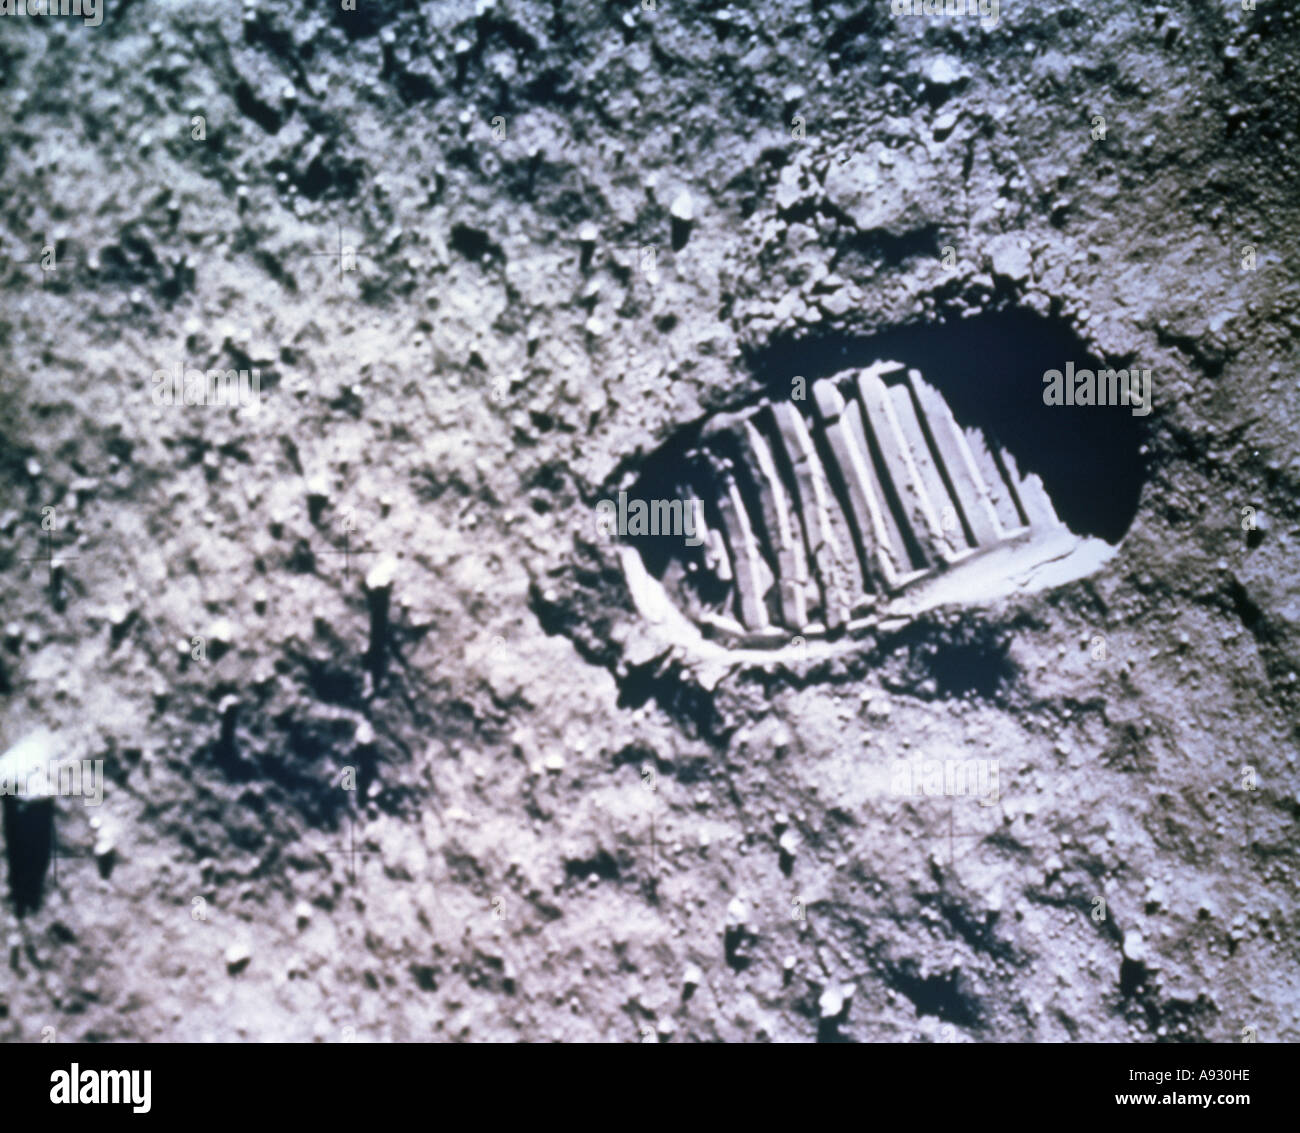 Astronaut Footprint on the Moon   Apollo 11 Mission  July 20, 1969 Stock Photo